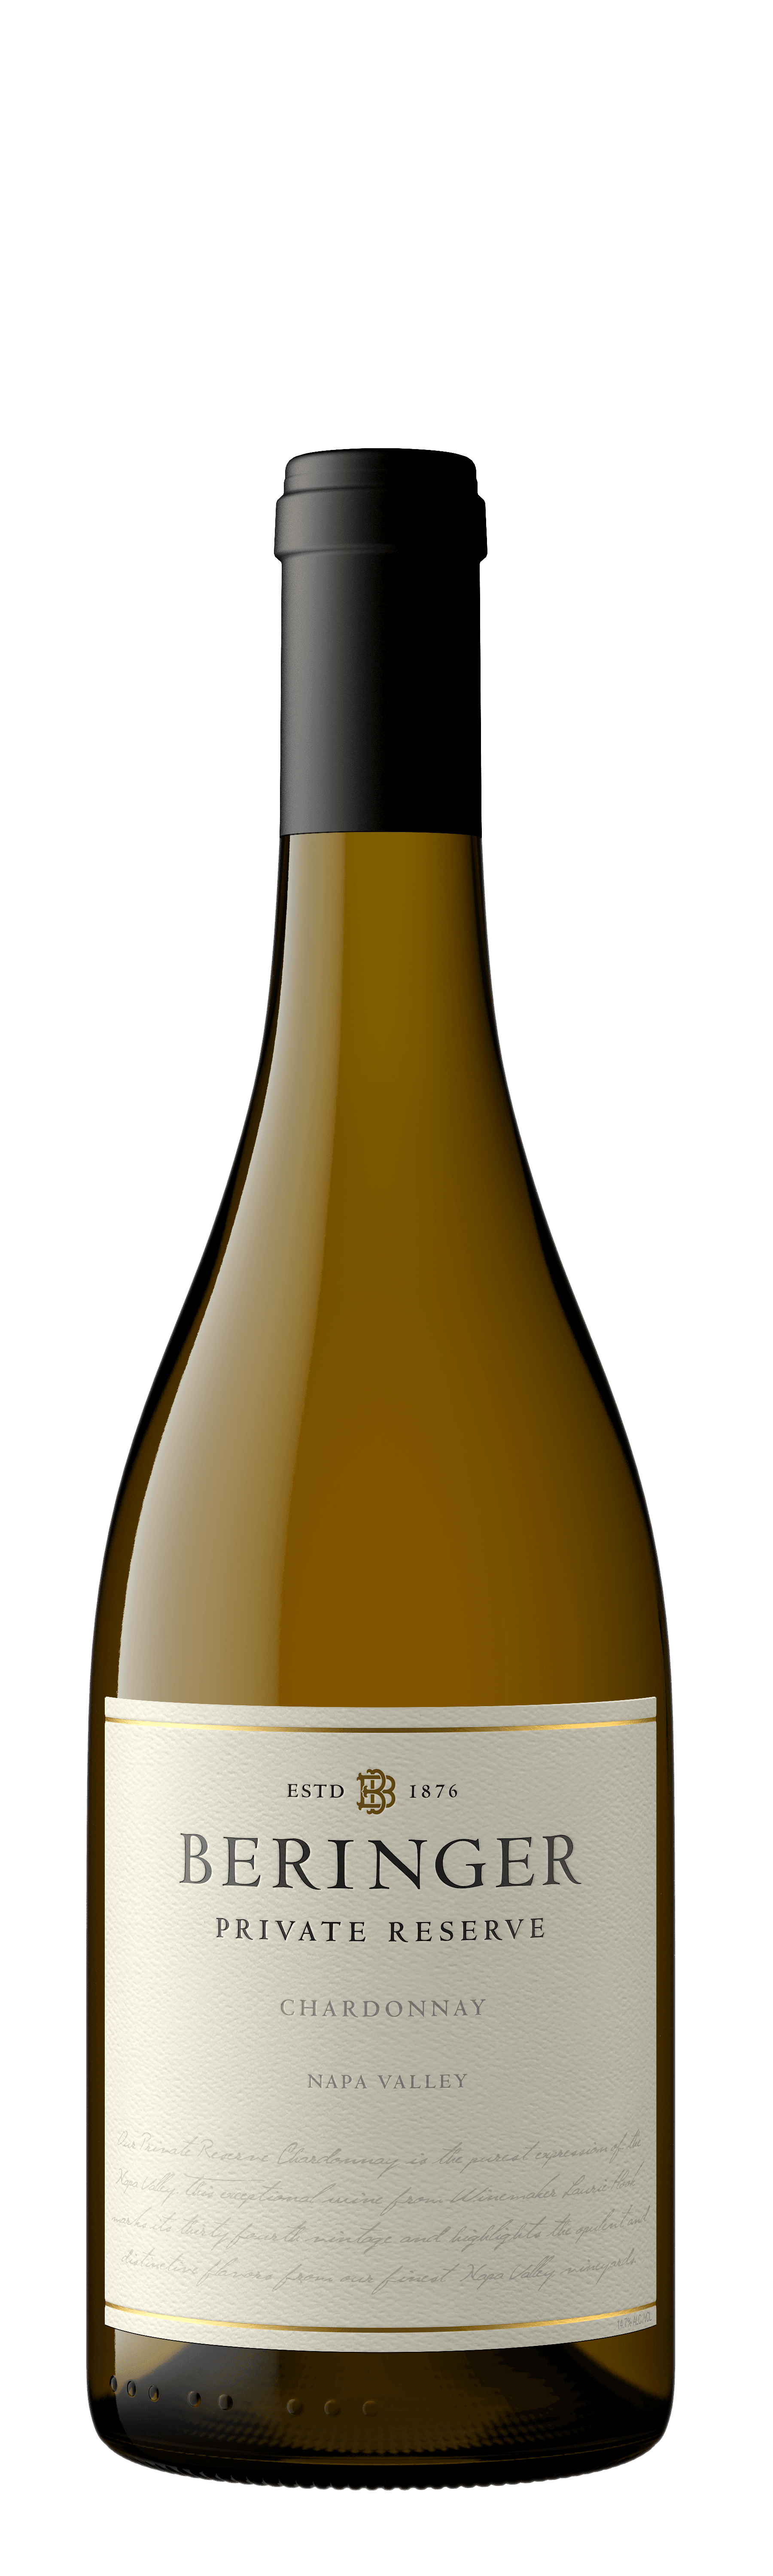 Beringer 'Private Reserve' Napa Valley Chardonnay